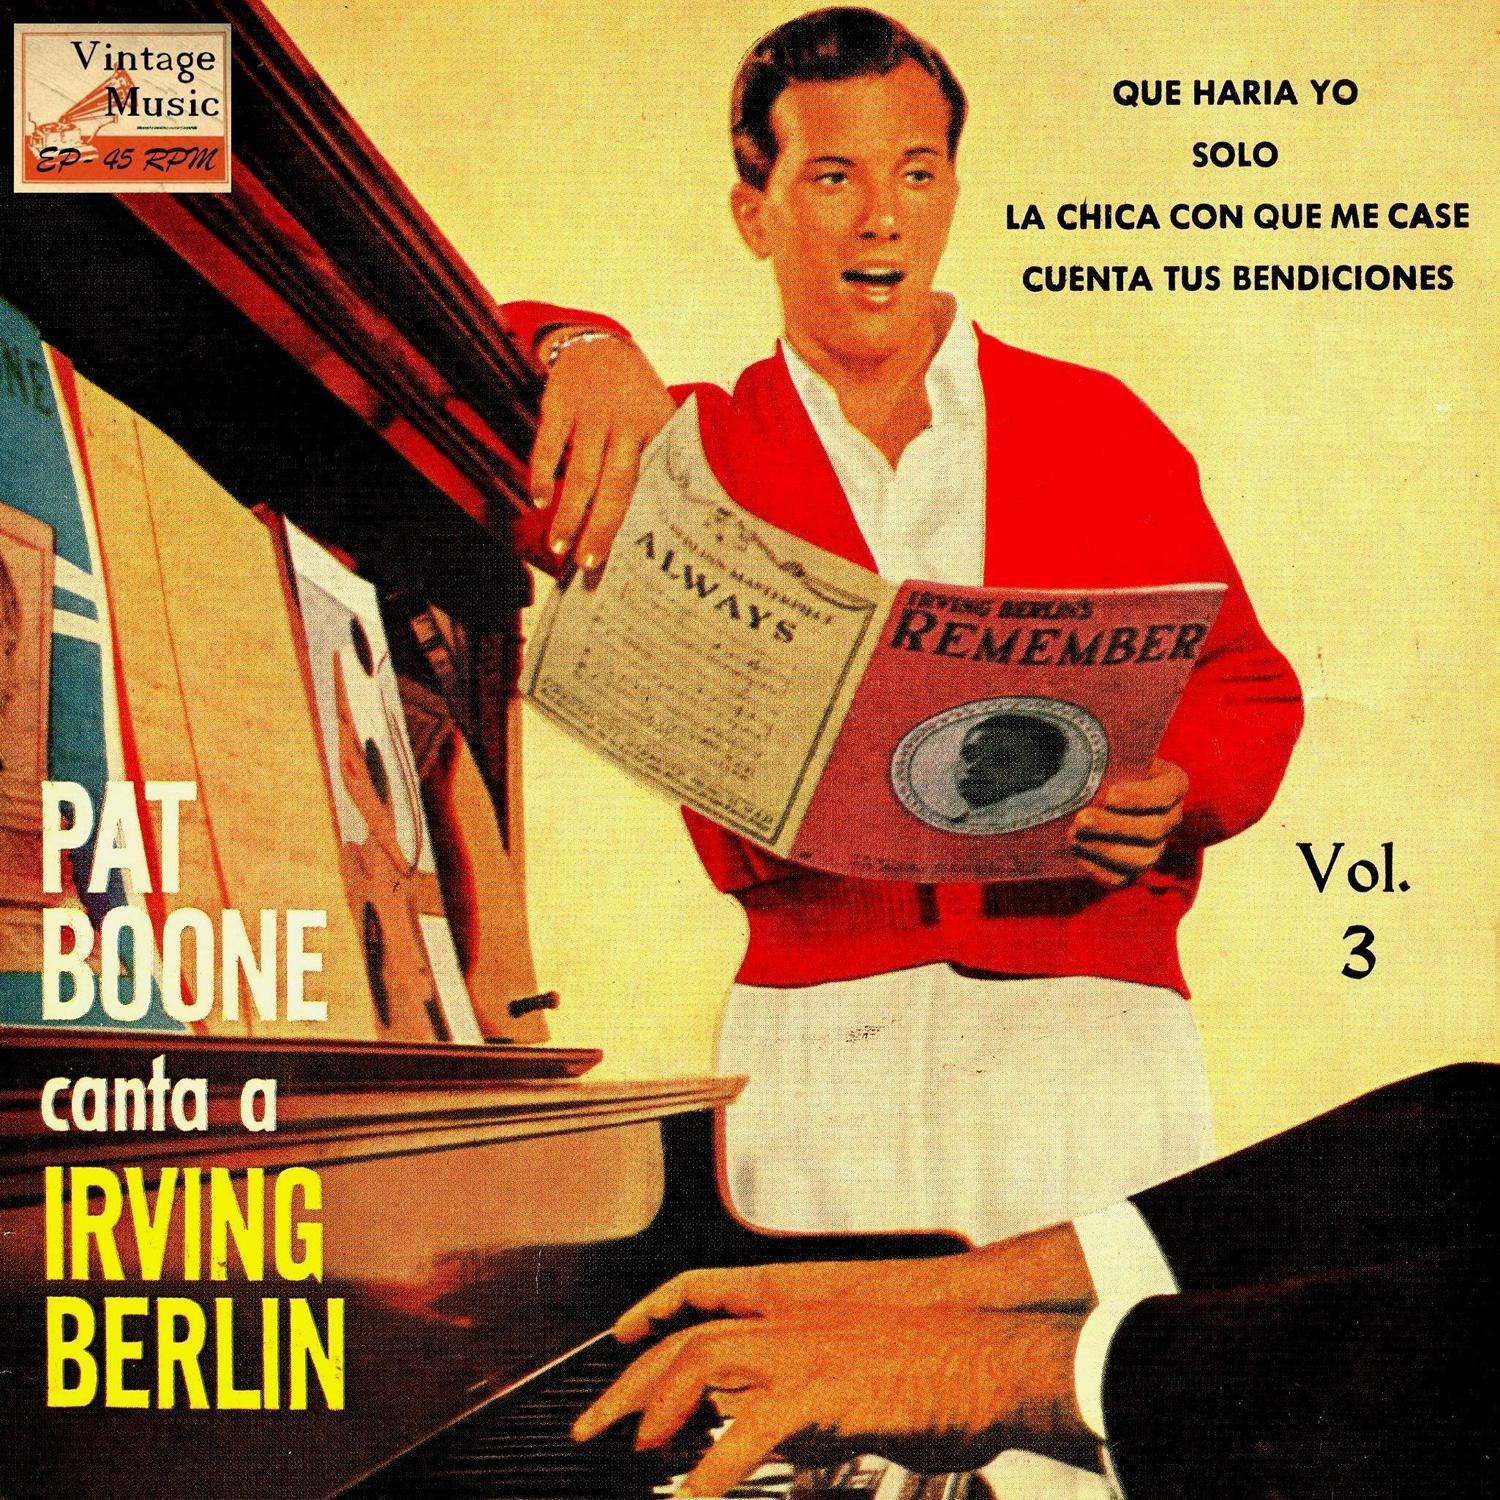 Vintage Vocal Jazz / Swing No. 93 - EP: Sing Irving Berlin专辑